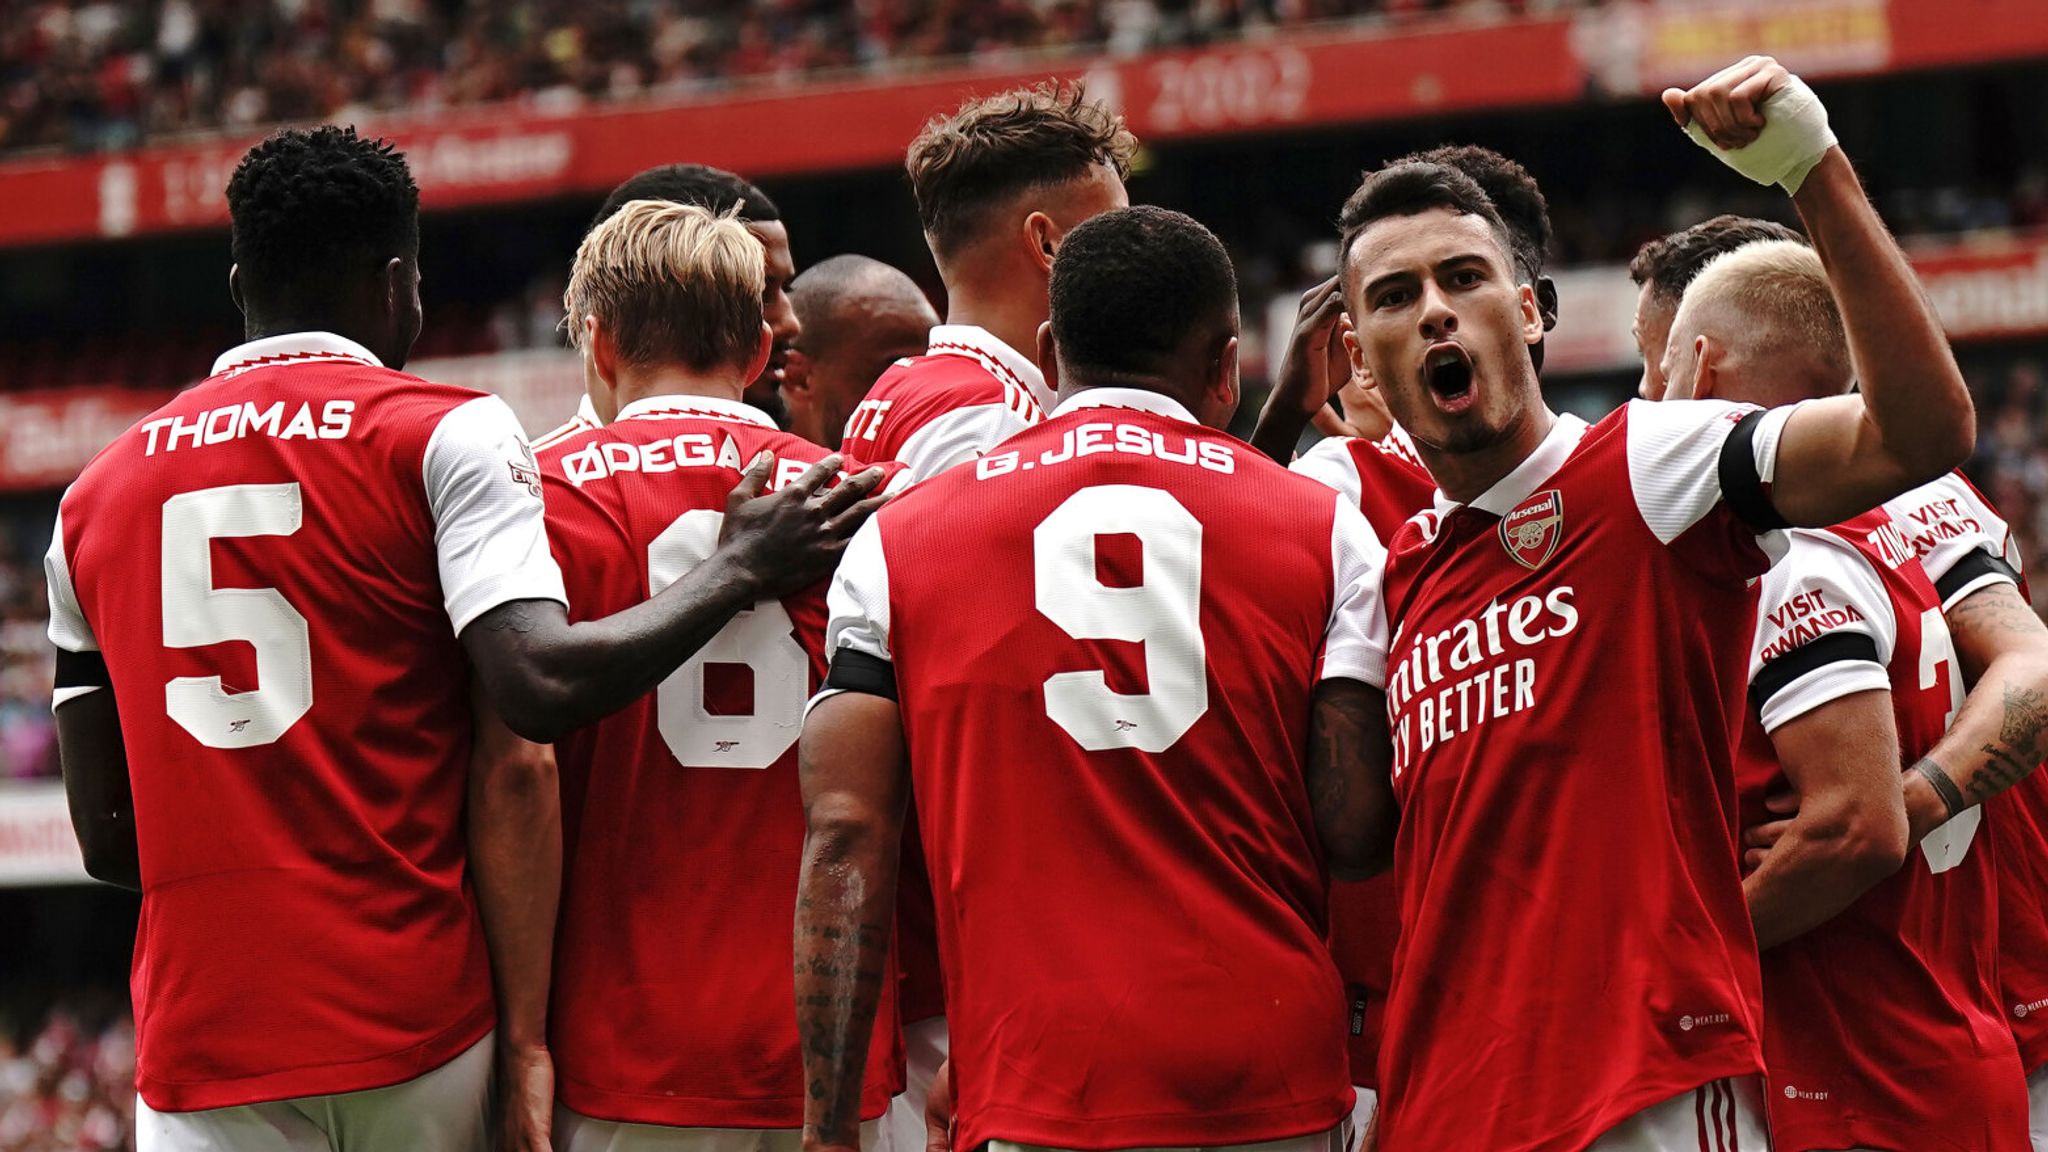 Arsenal v Sevilla Player Ratings fron a cynical old Gooner – Jesus Motm